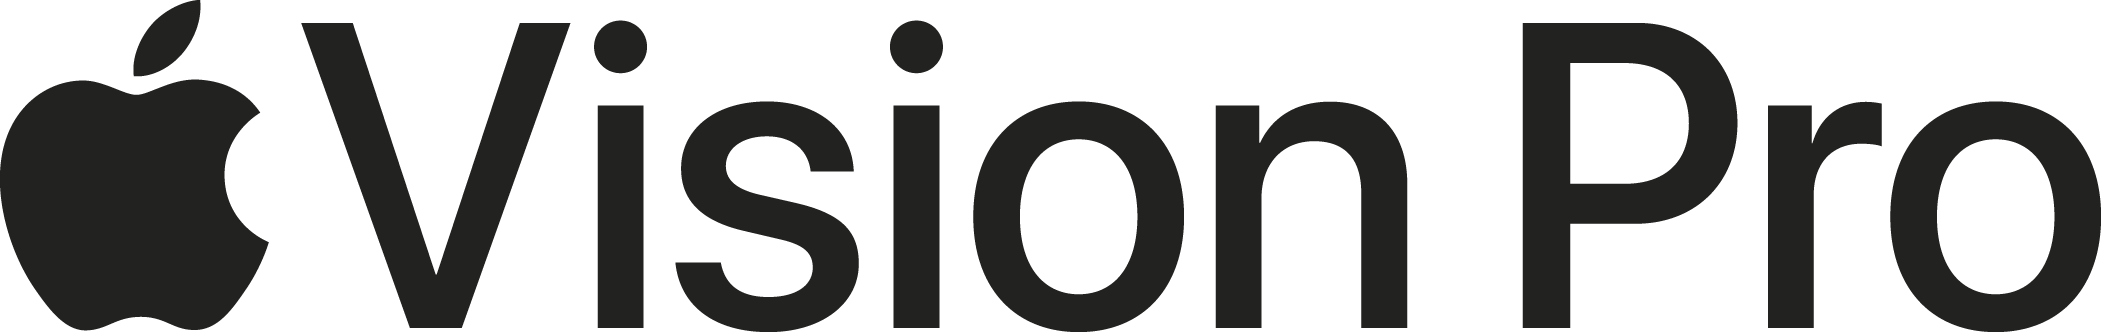 Apple Vision Pro Logo